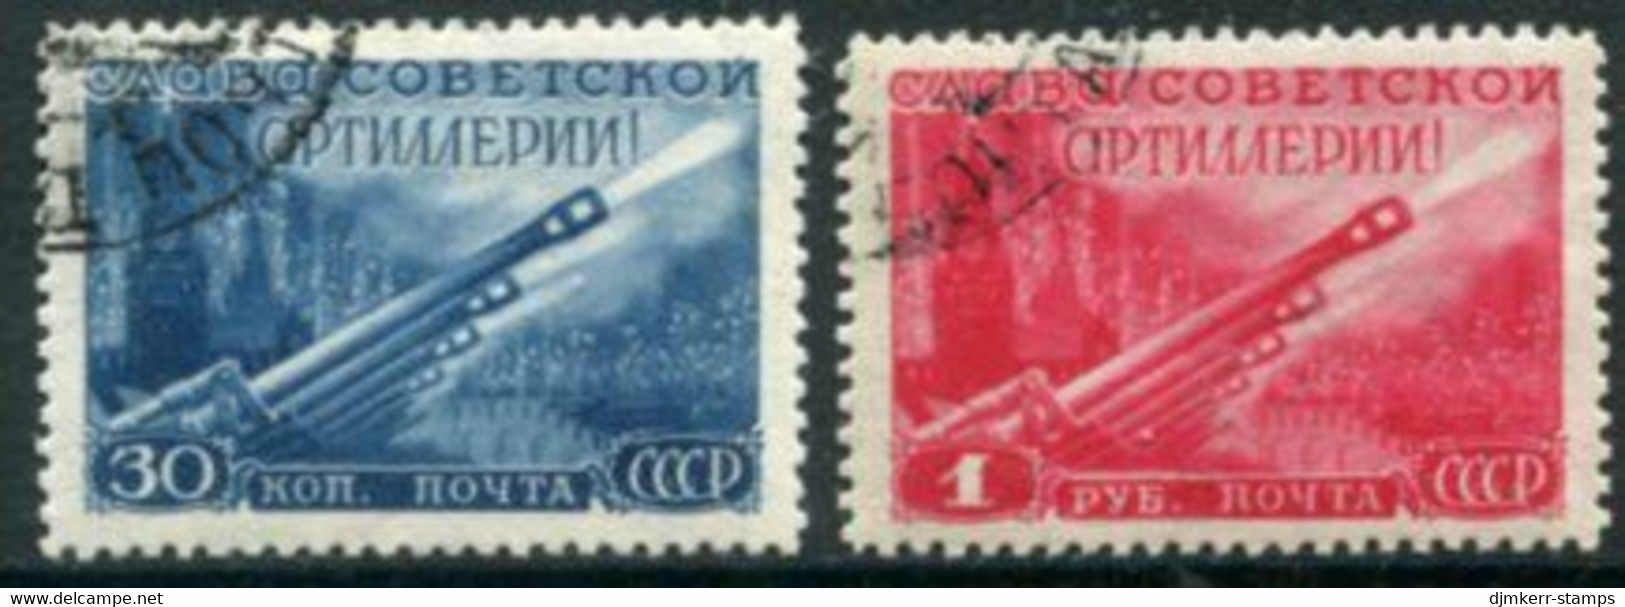 SOVIET UNION 1948 Artillery Day Used.  Michel 1290-91 - Usati